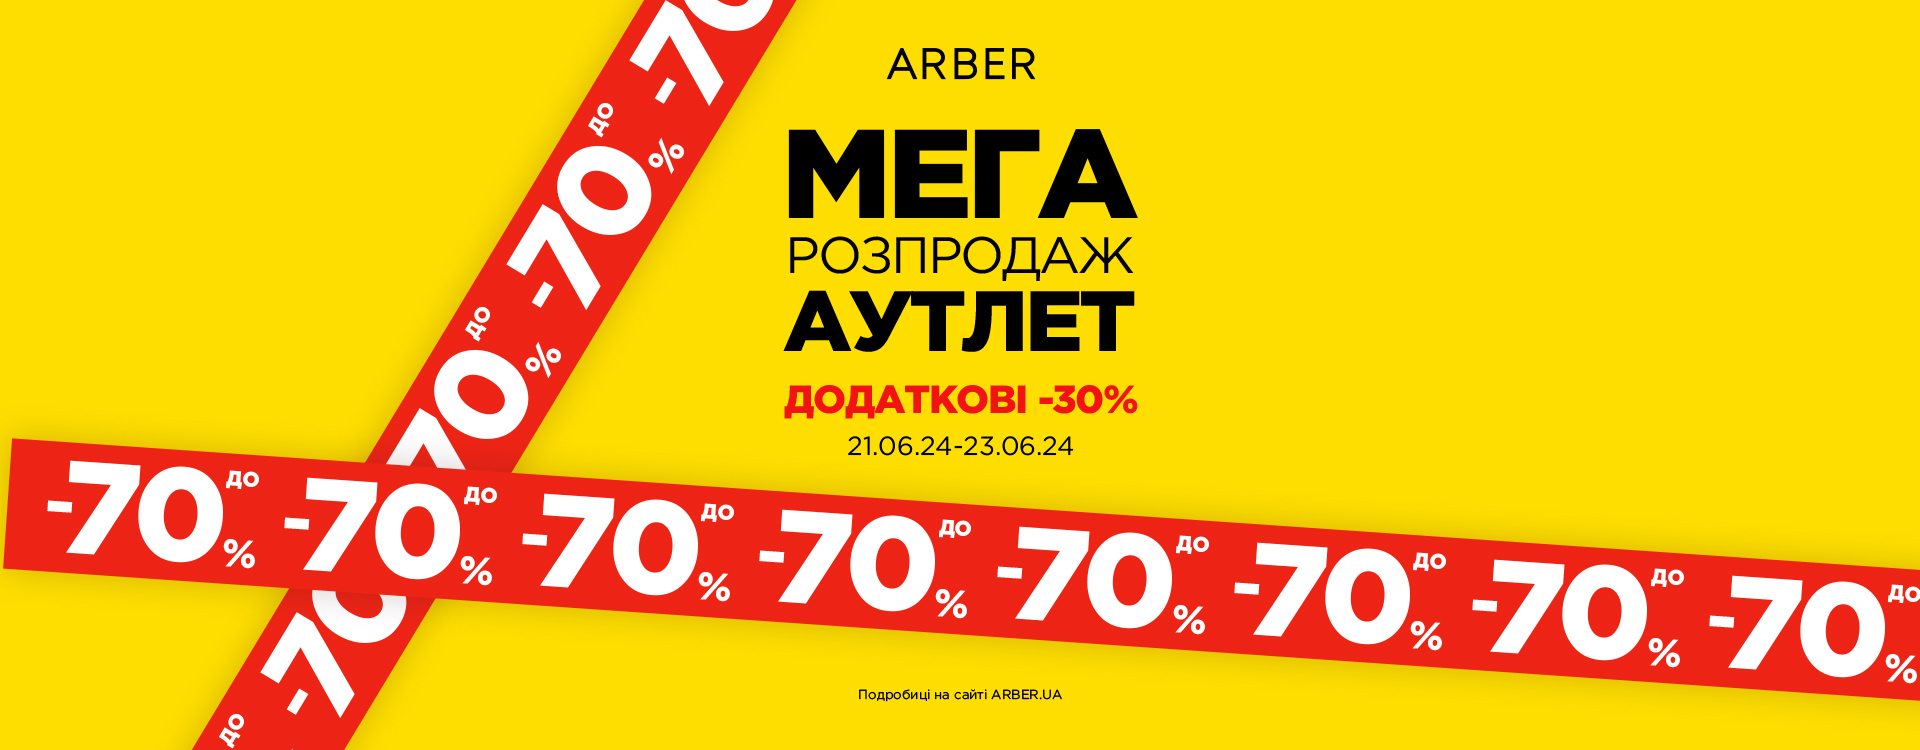 Mega sale in ARBER stores